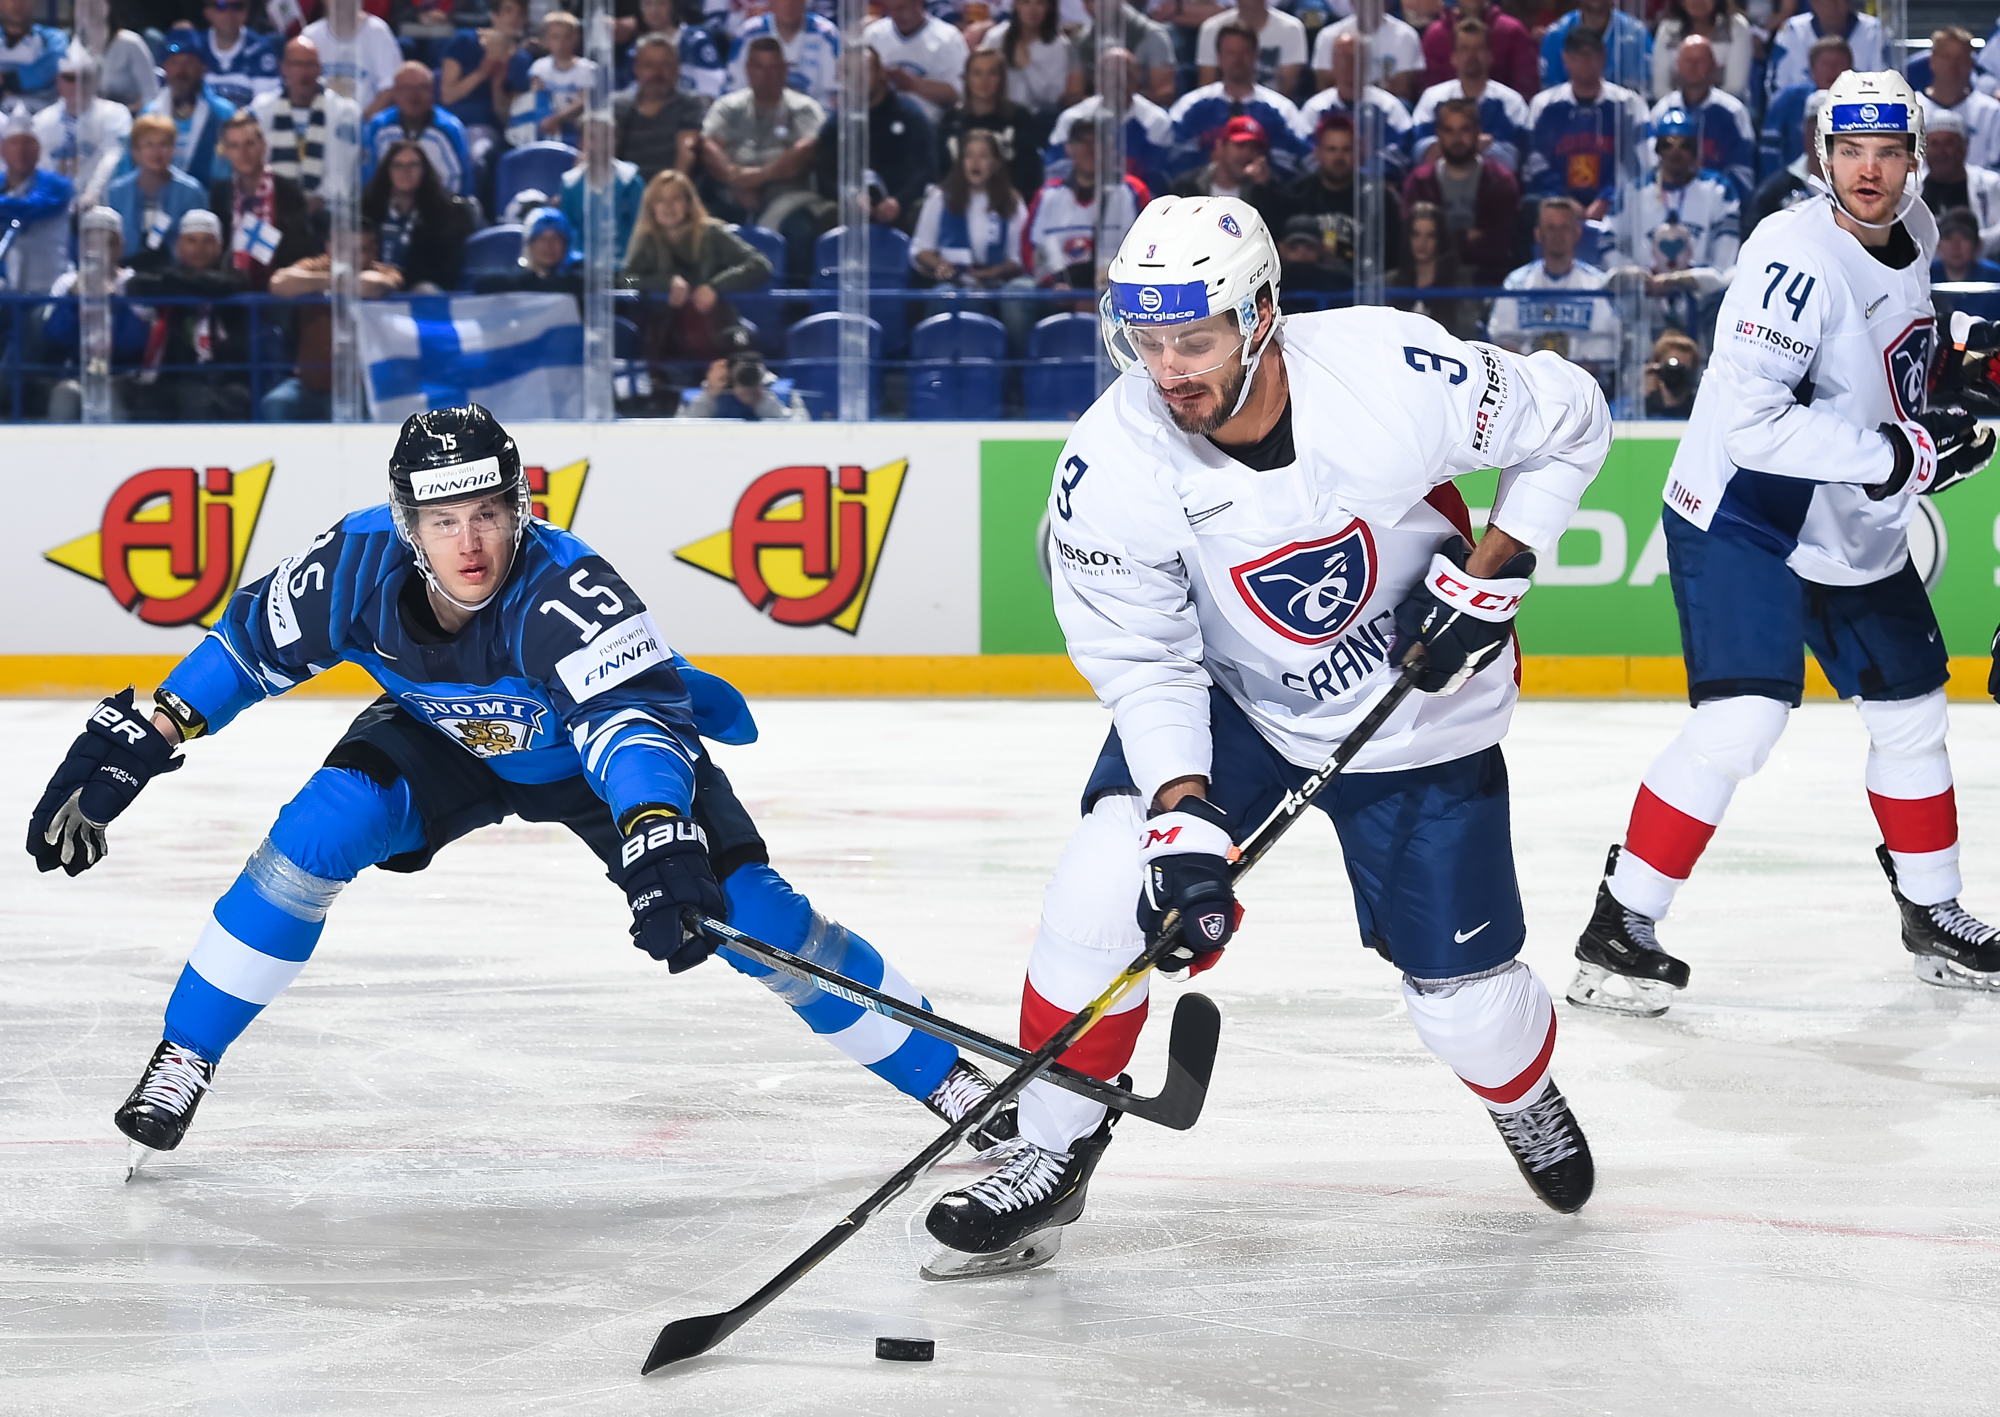 IIHF - Gallery: France vs. Finland - 2019 IIHF Ice Hockey World ...